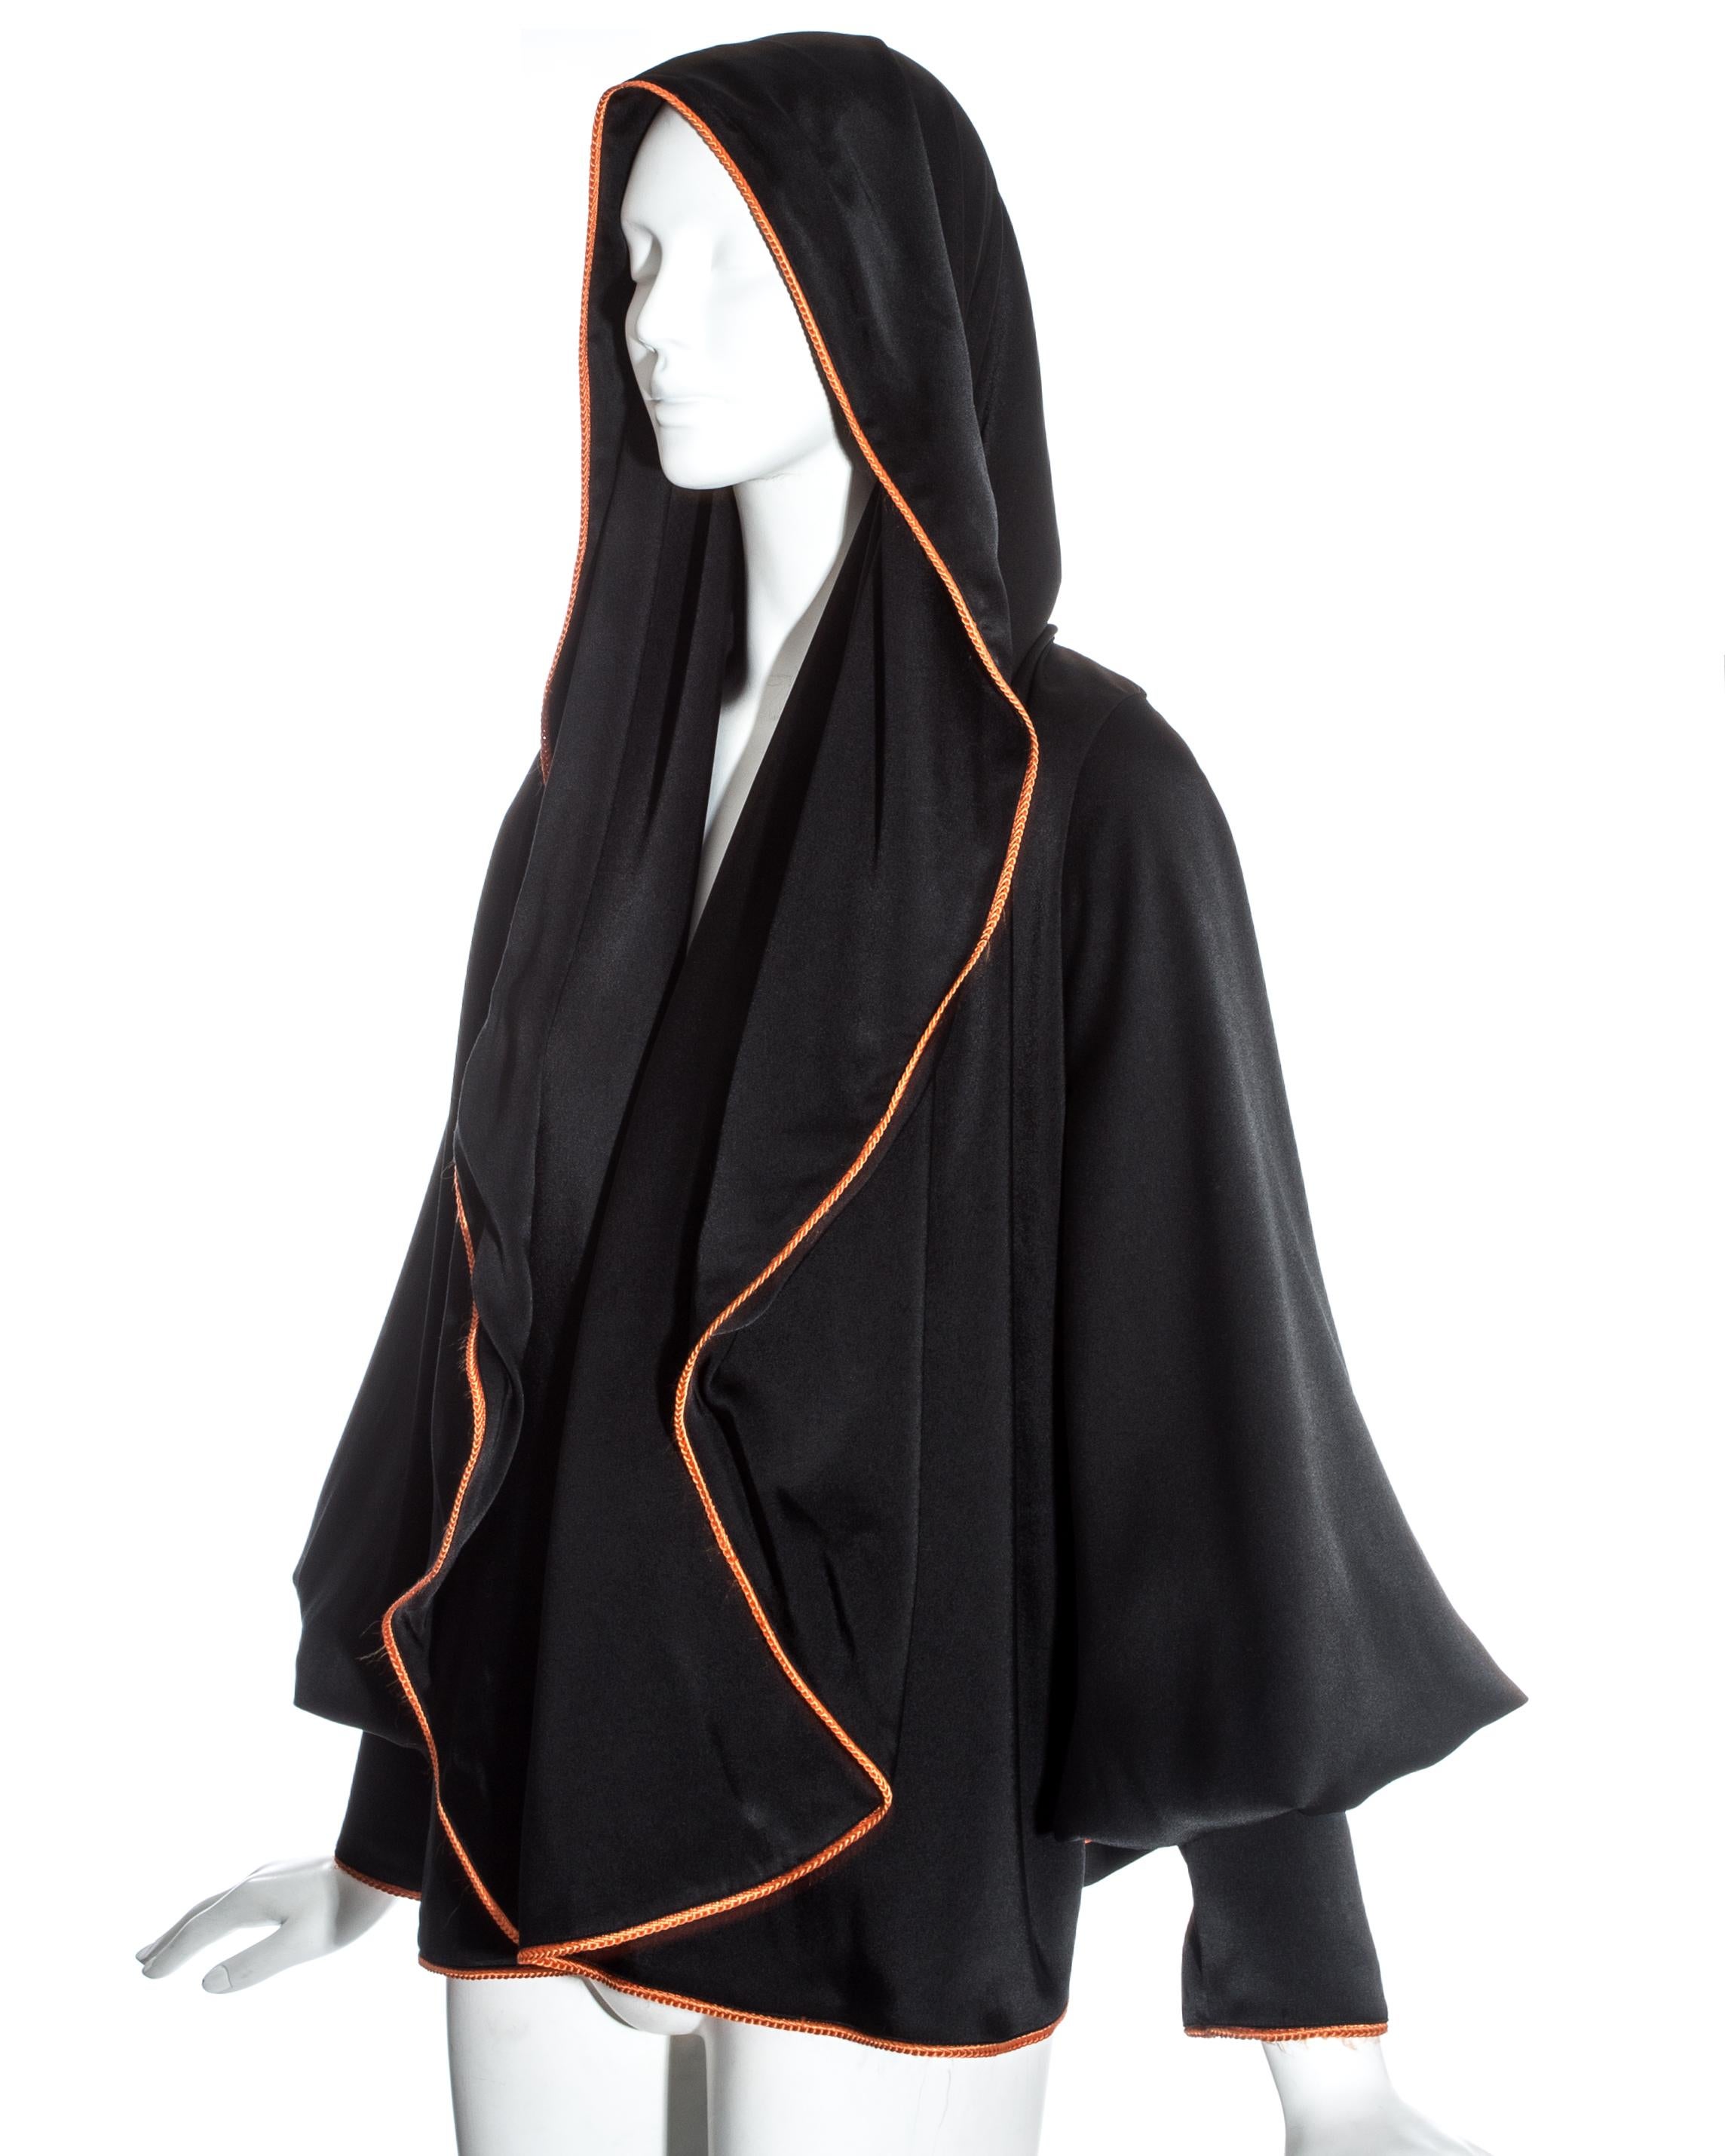 Women's Vivienne Westwood black satin hooded bolero jacket with orange trim, ss 1993